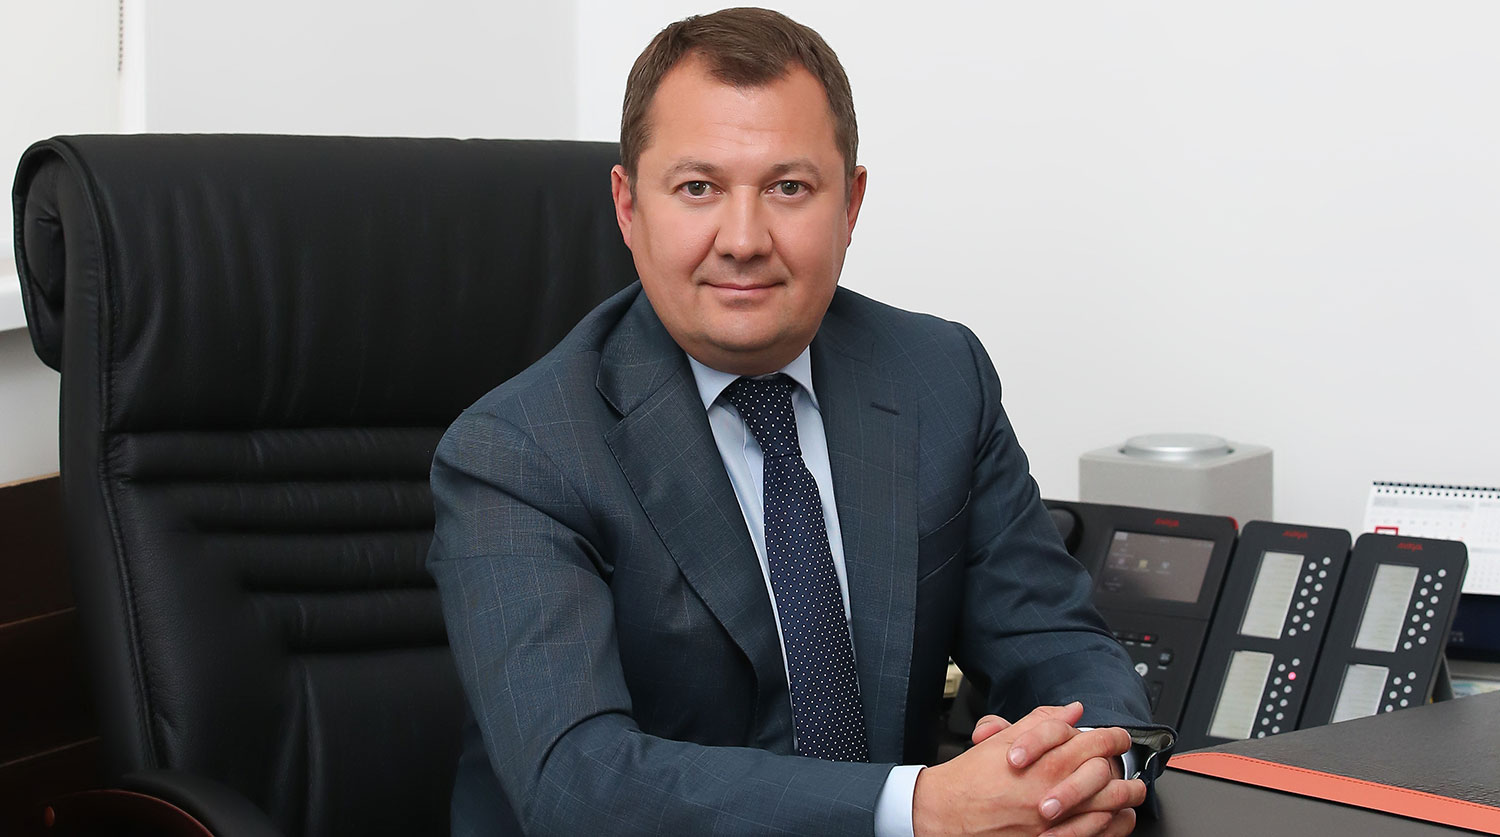 Тамбовский губернатор Александр Никитин отправился в отставку, на его место назначен новый - фото 2